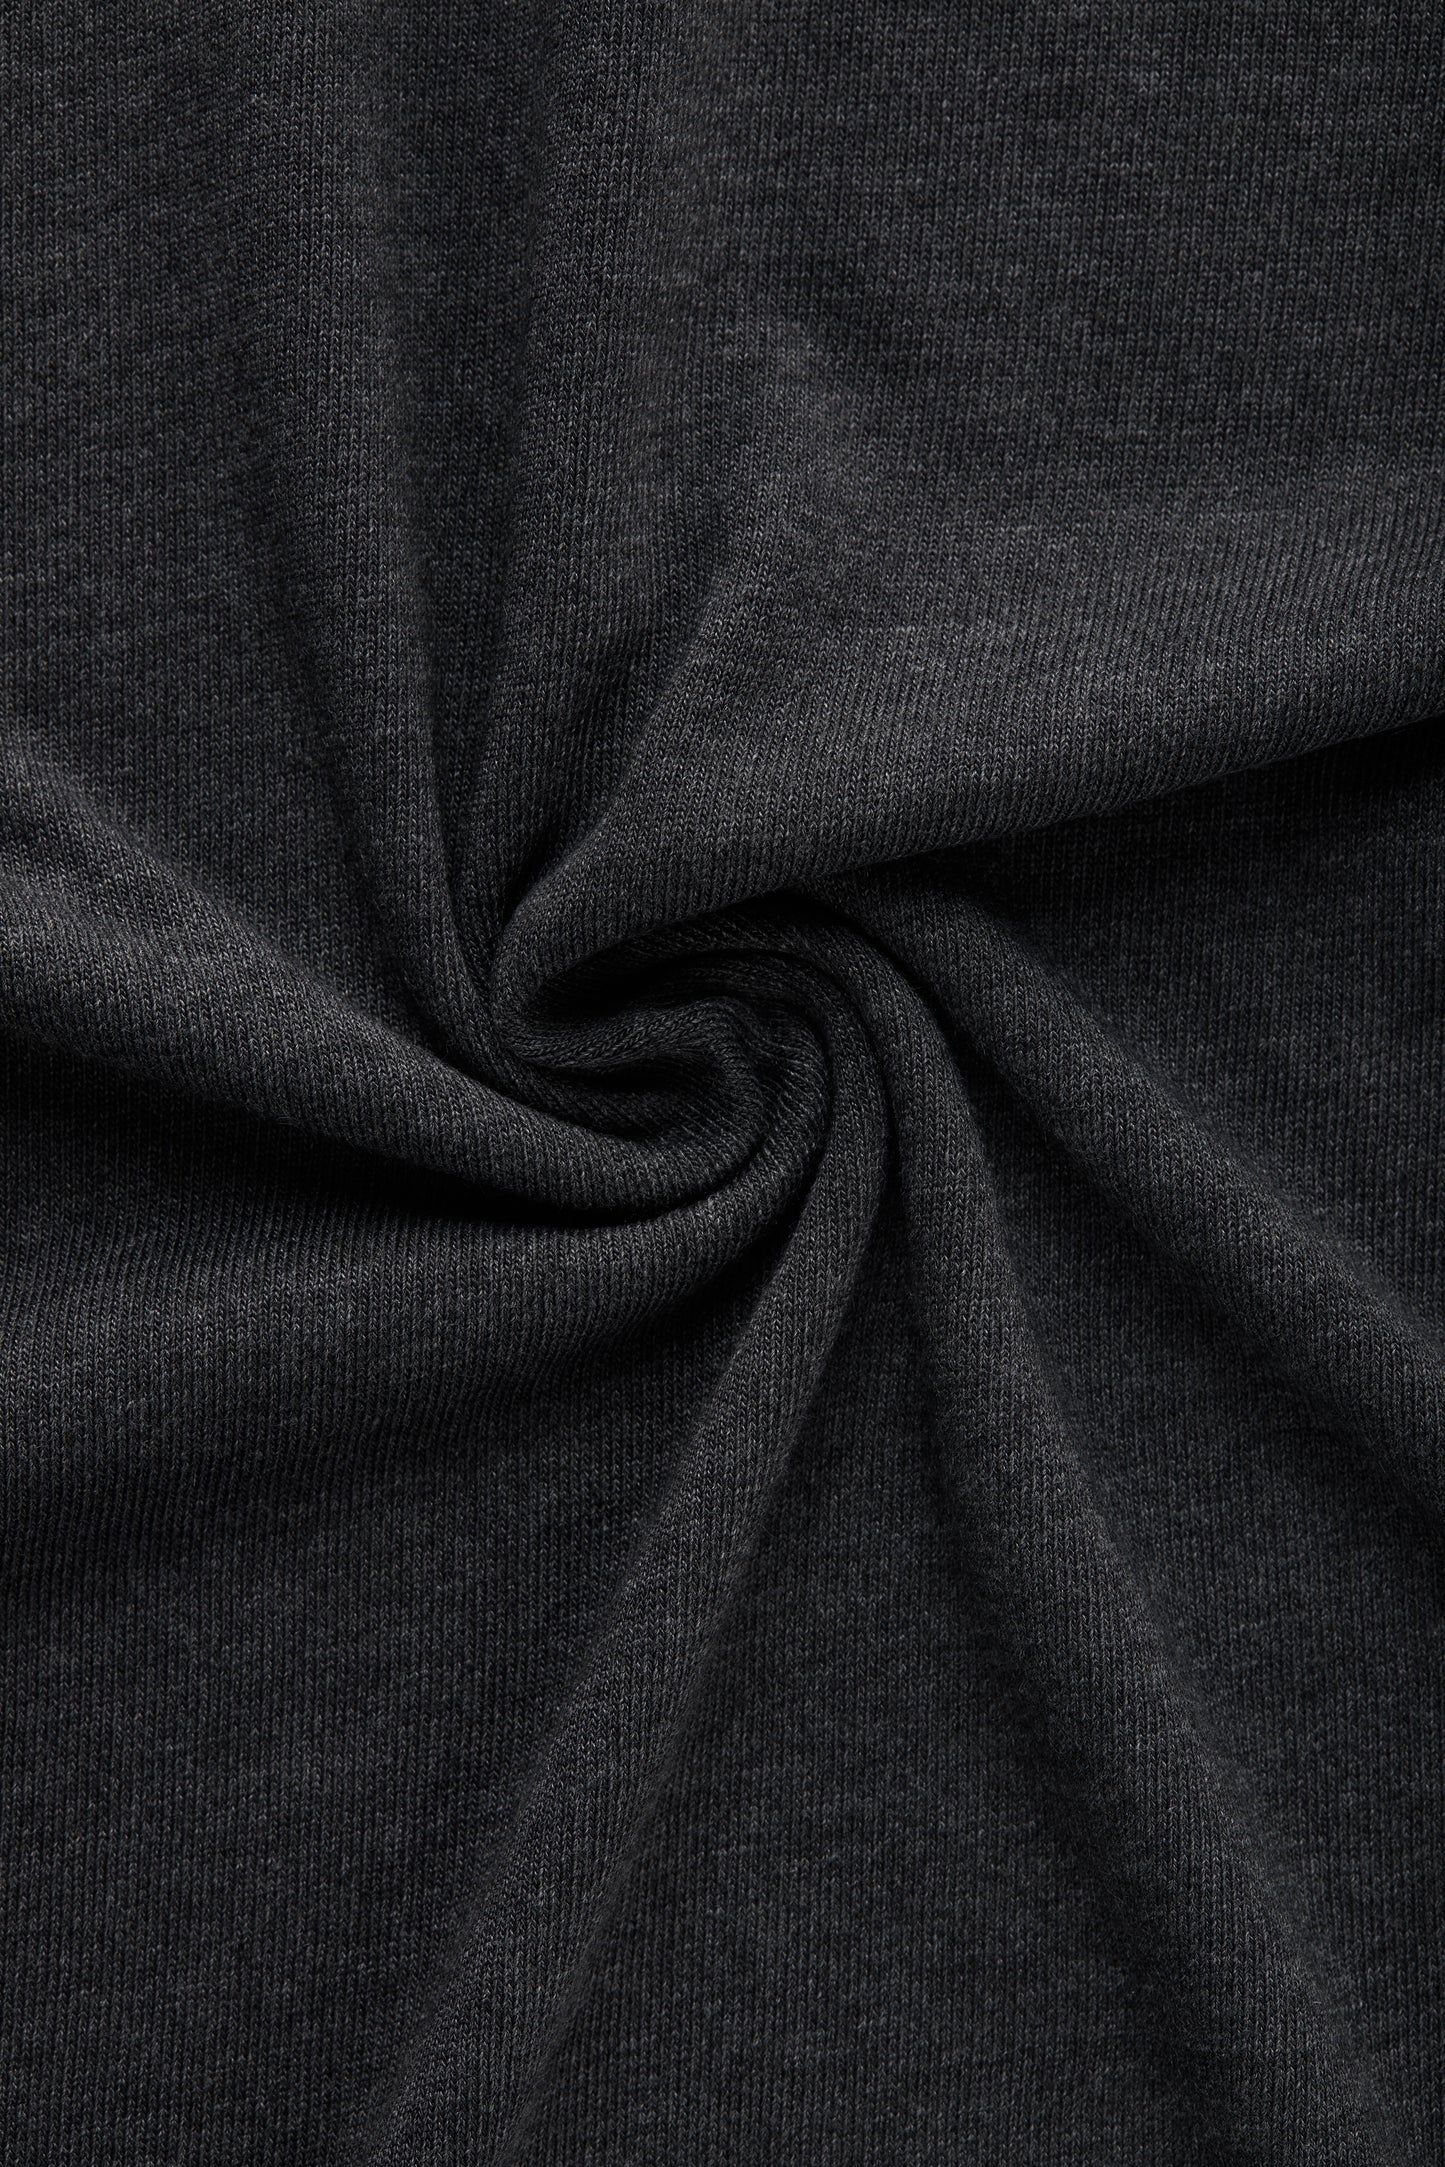 Galba Long Sleeve Hooded Tee Shirt Black Beauty